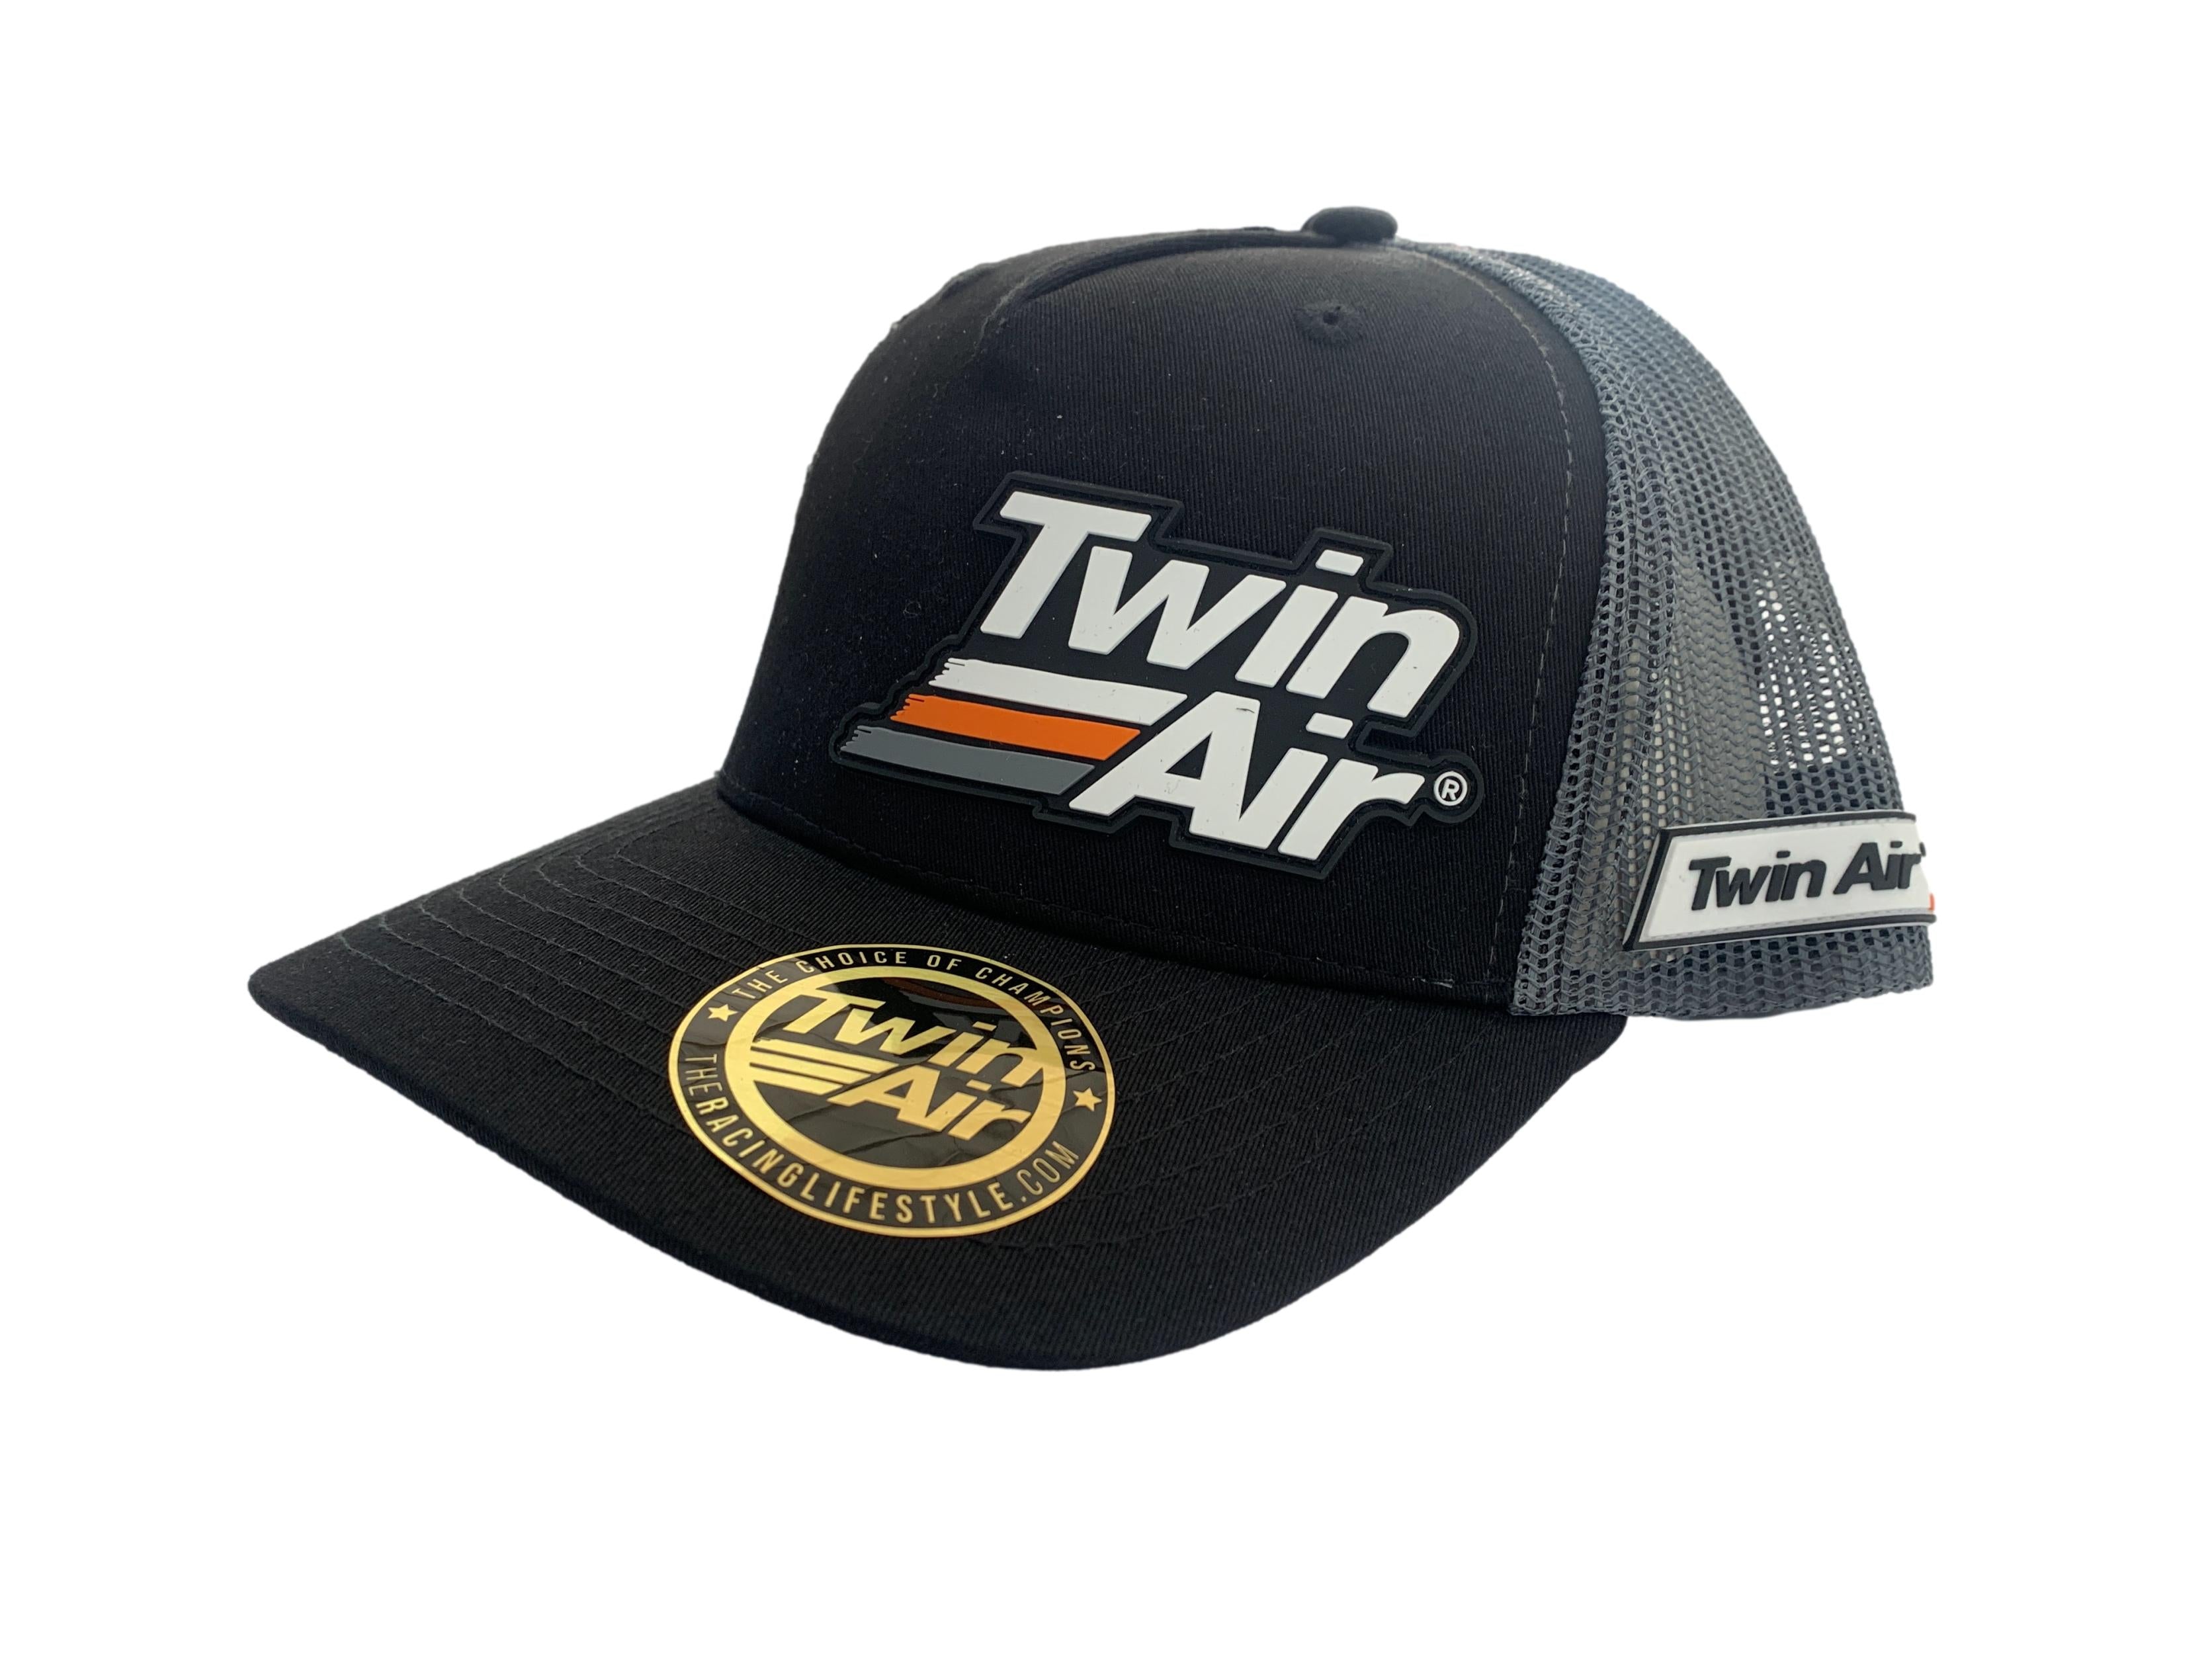 MC Auto: Twin Air Grey/Black Trucker Cap